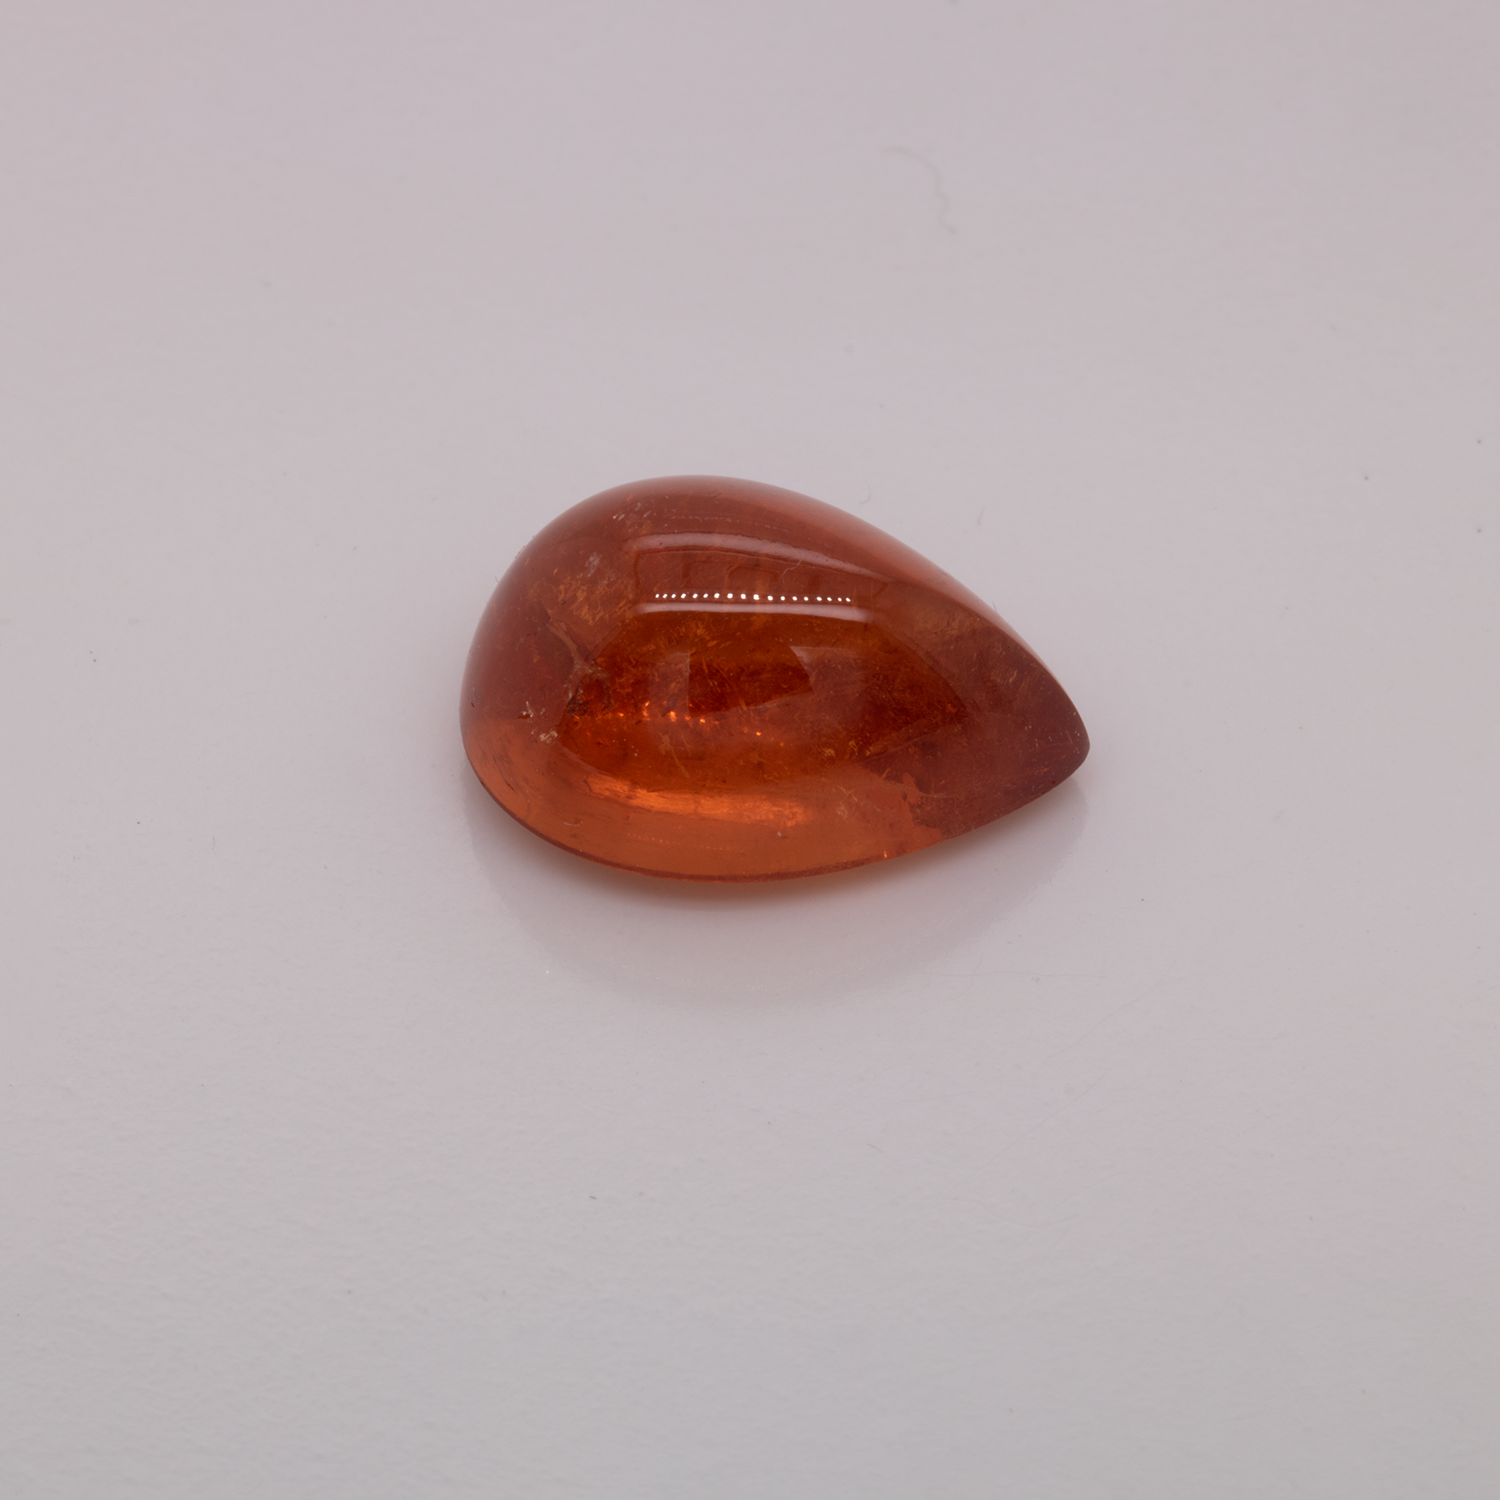 Mandarin Granat - orange, birnform, 12,4x8,7 mm, 6,73 cts, Nr. MG99012